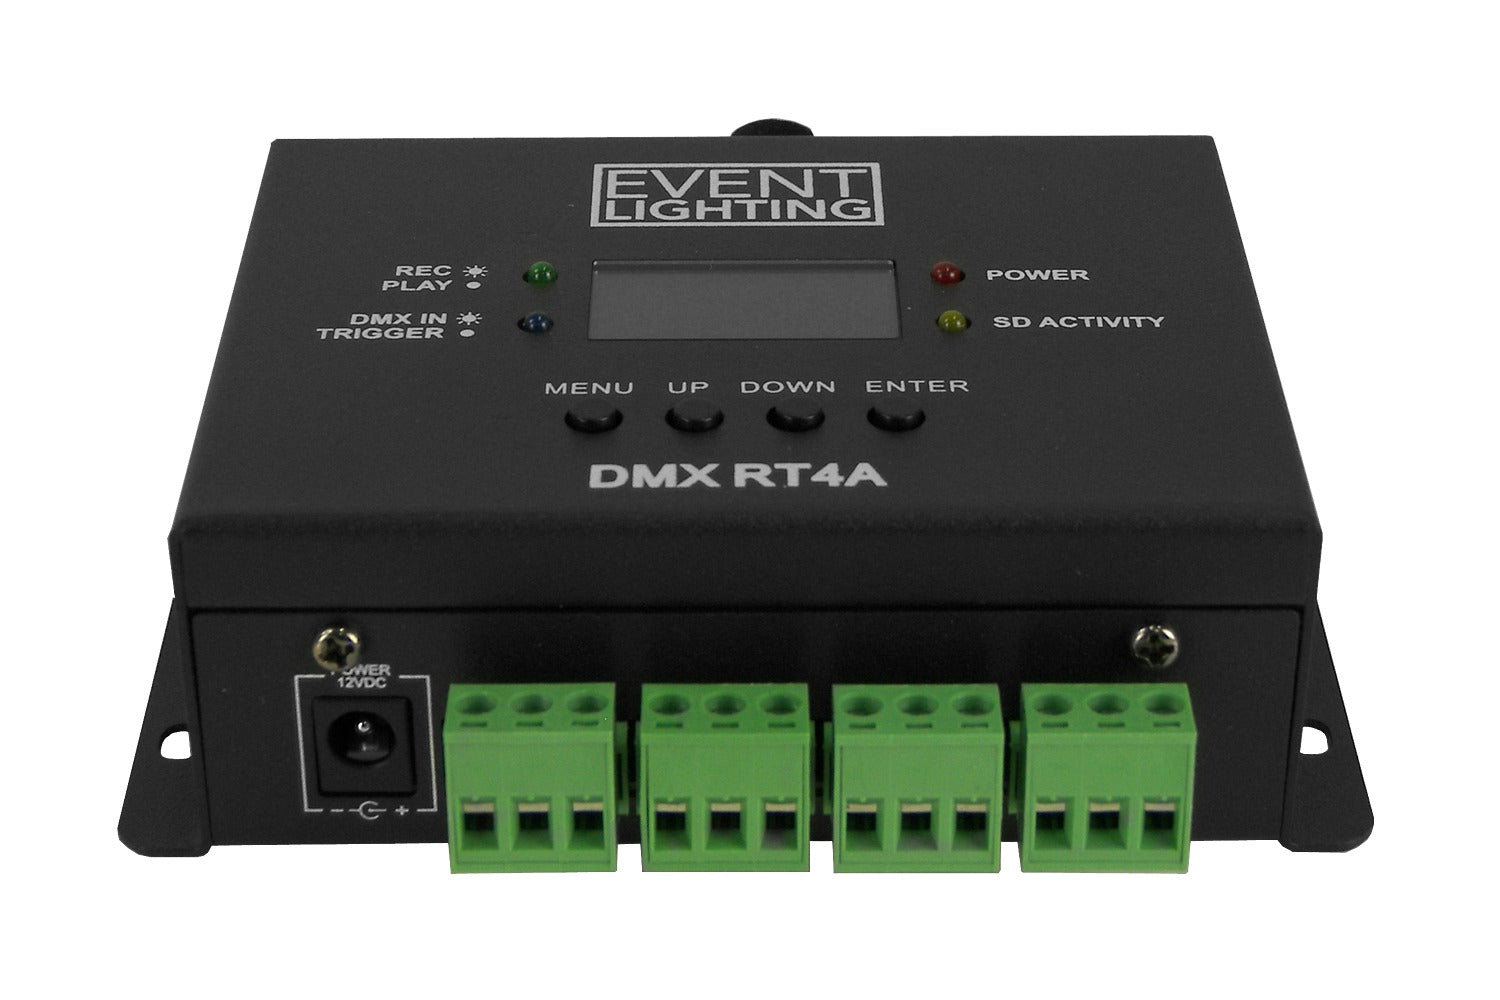 DMXRT4A - DMX and Audio Recorder/Trigger